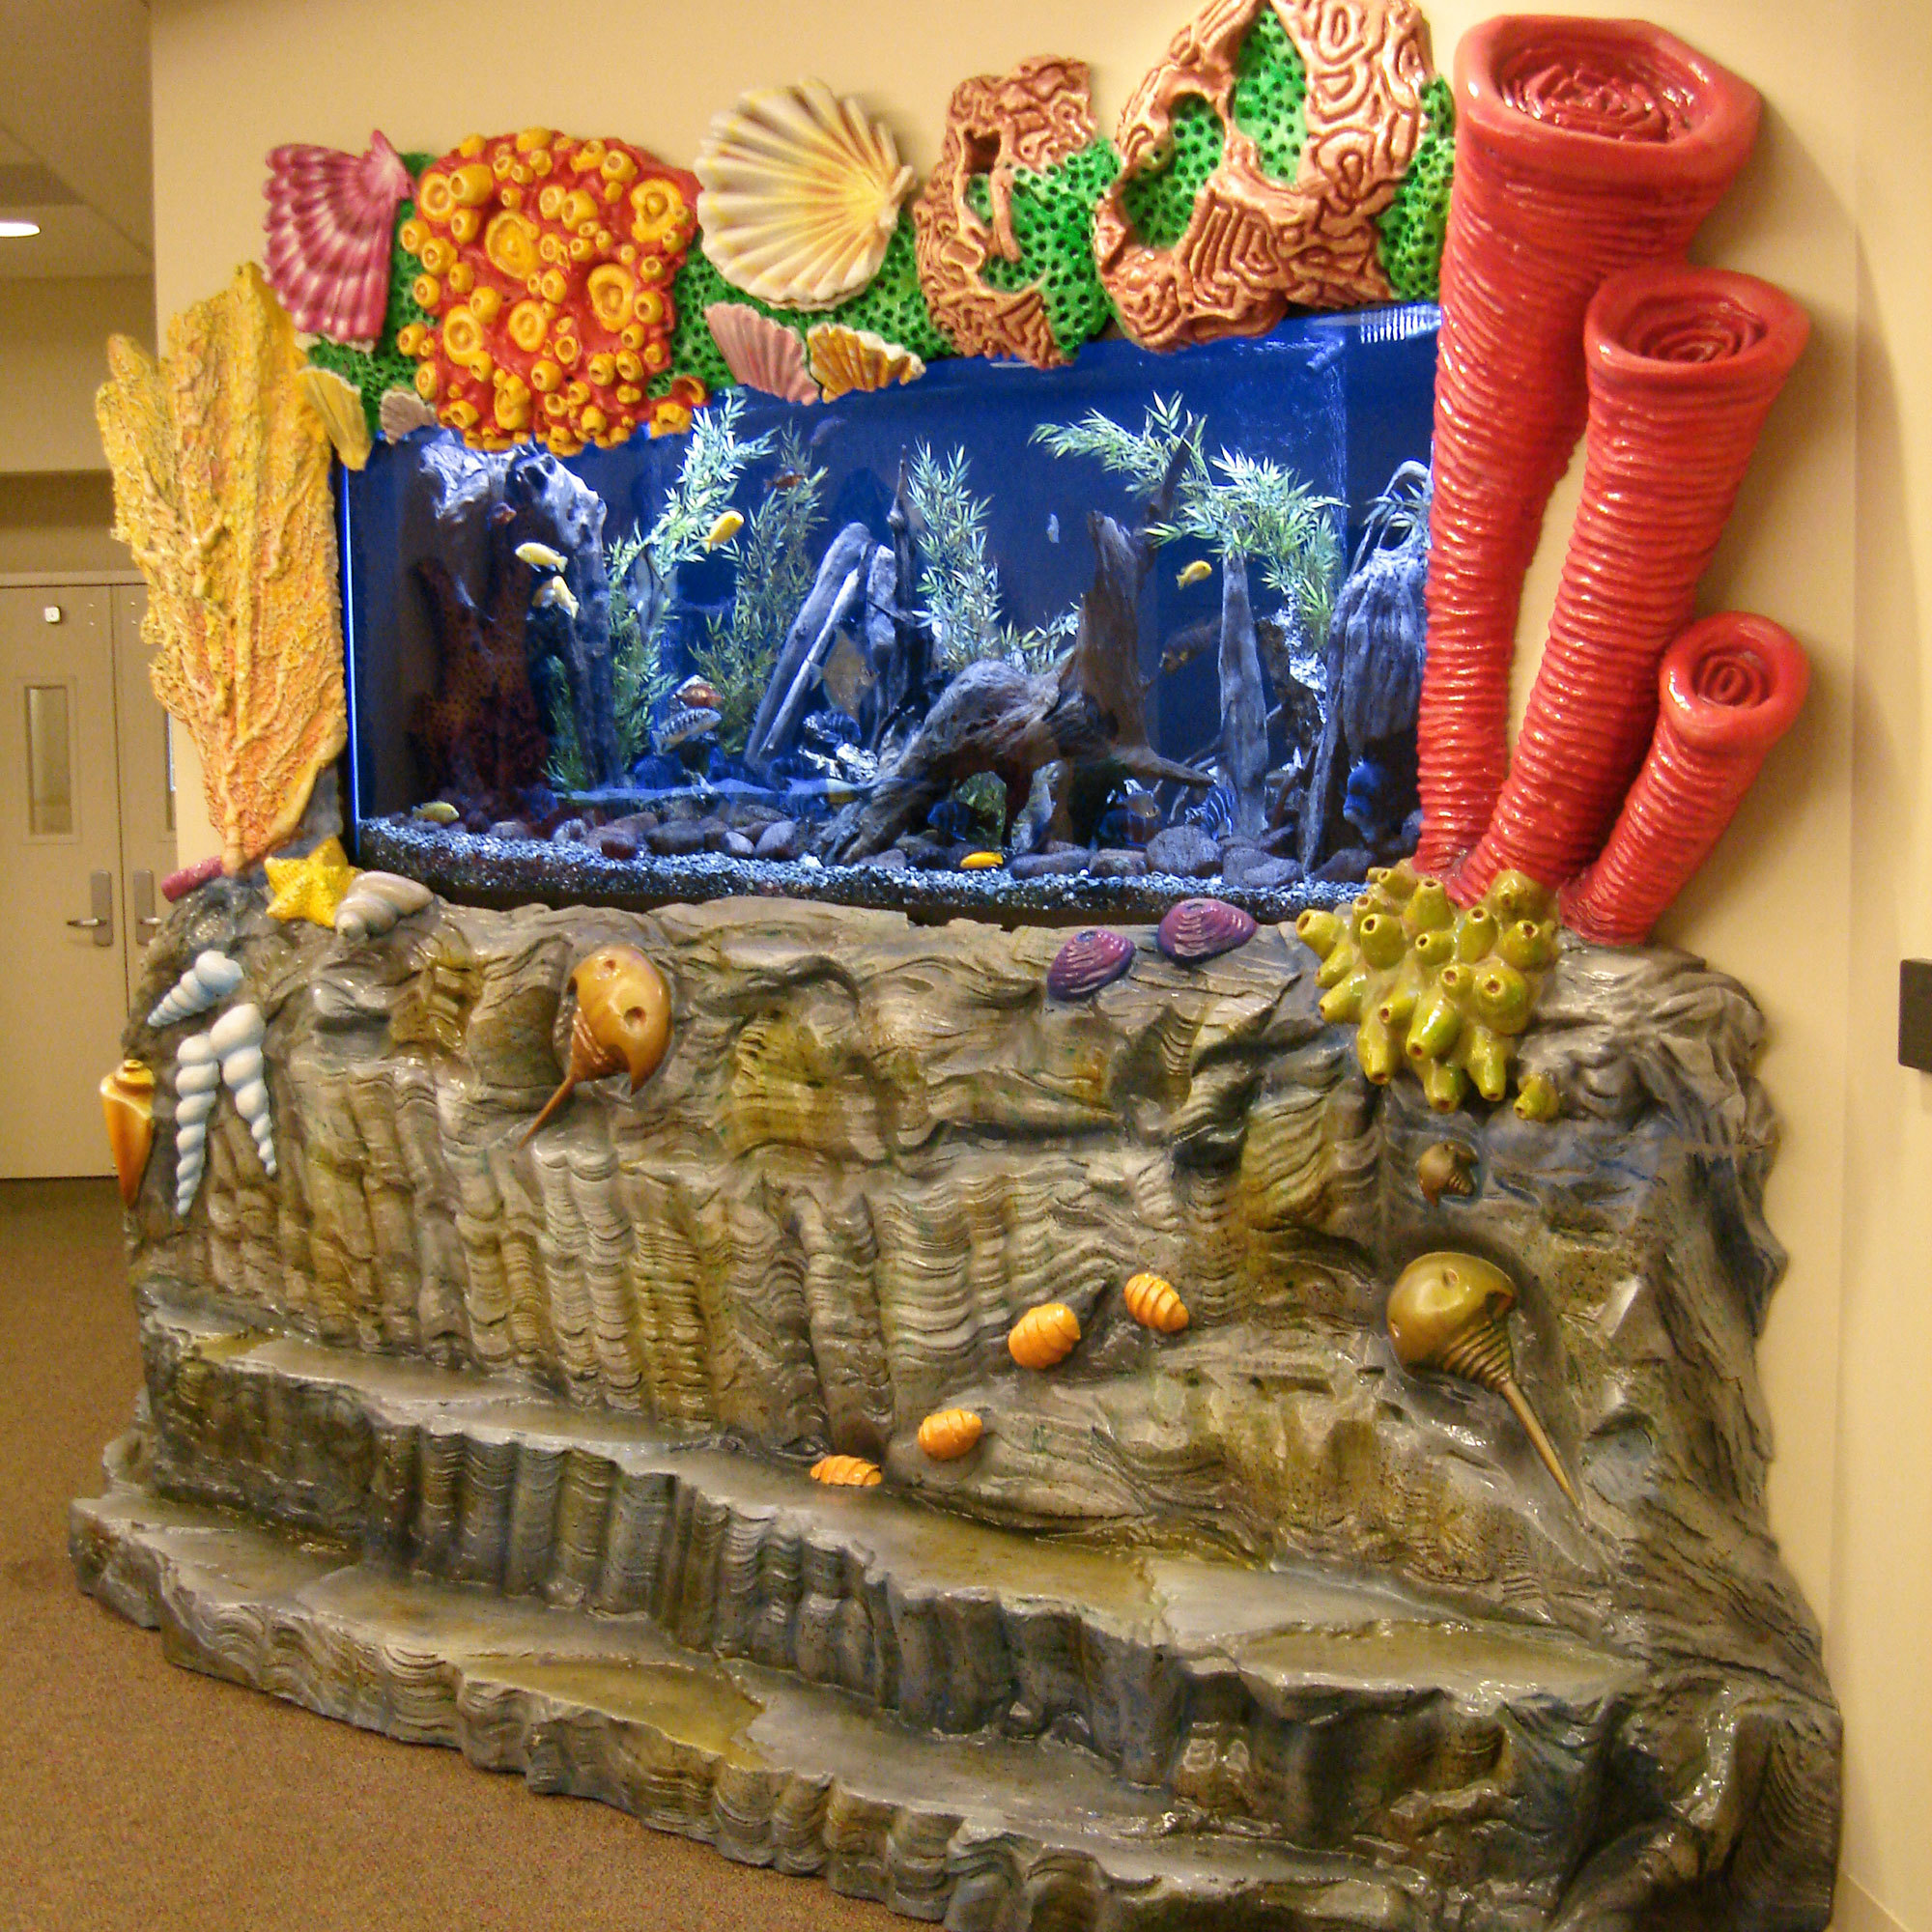 3D Sculpted Undersea Themed Aquarium at Idlewild Baptist Church in Tampa.